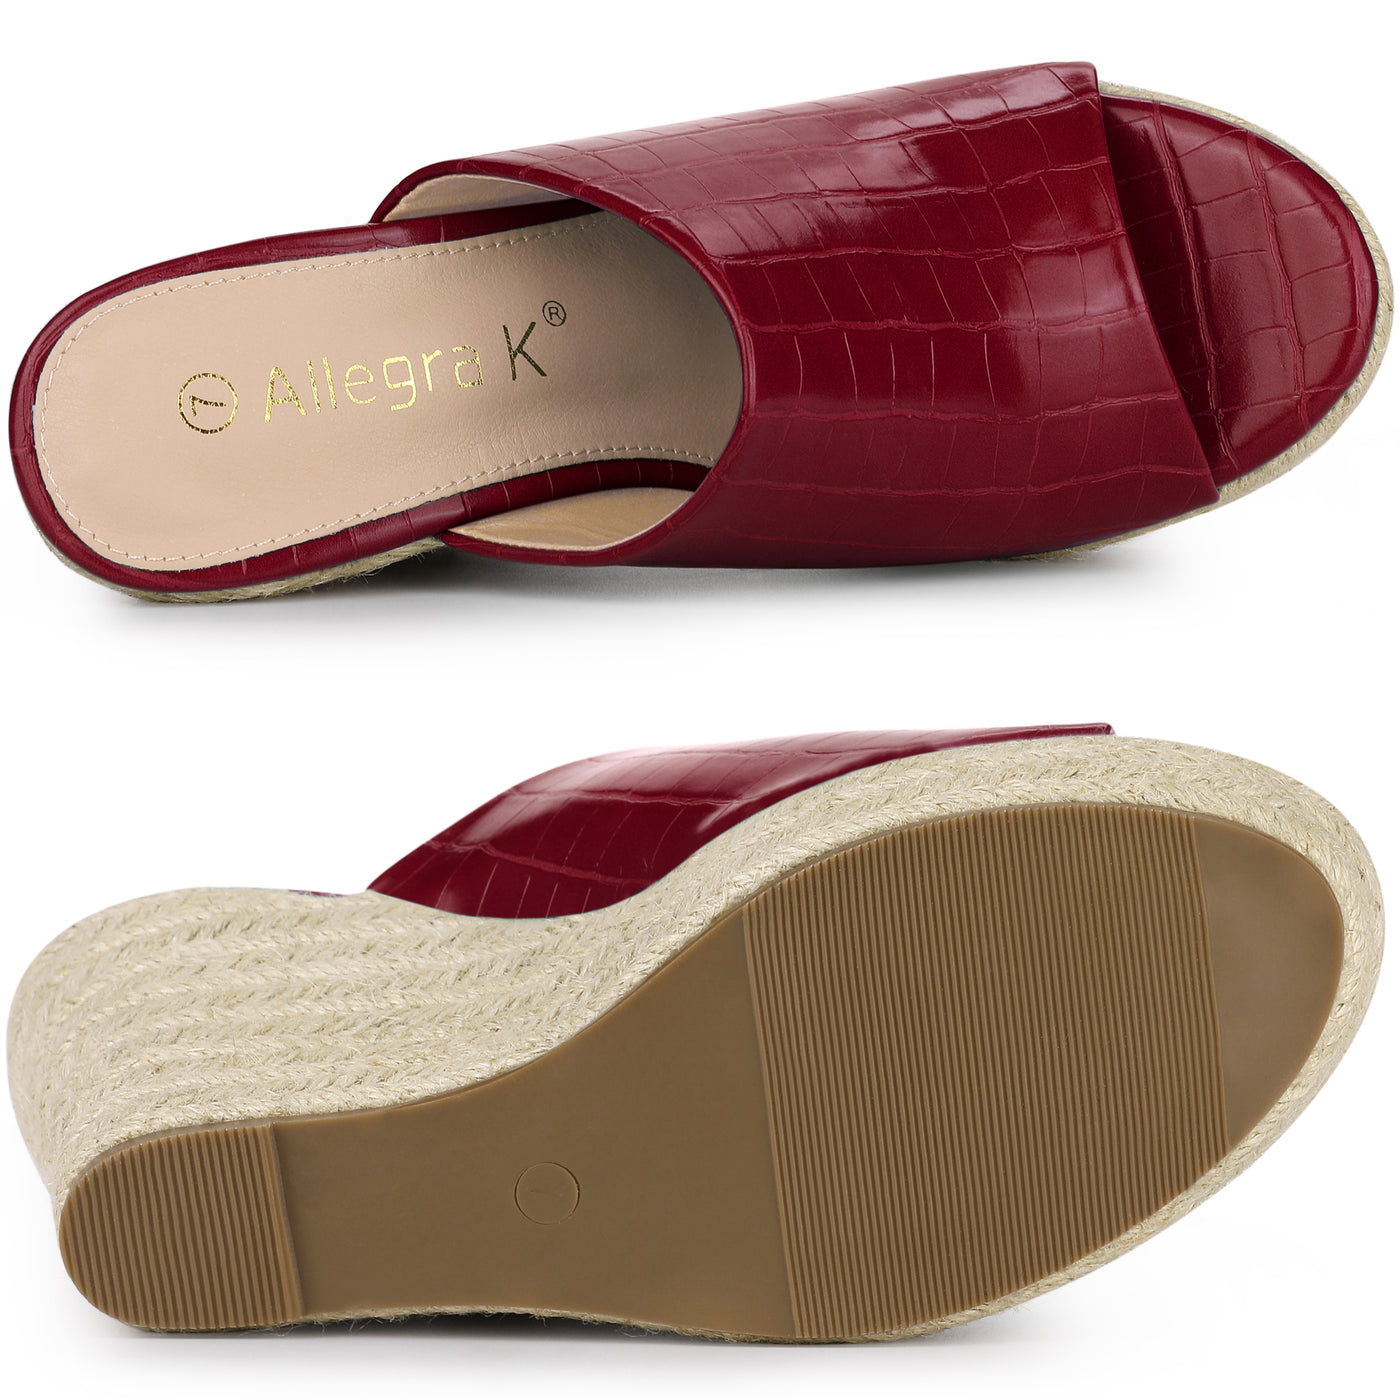 Allegra K Women's Espadrilles Wedges Wedge Sandals